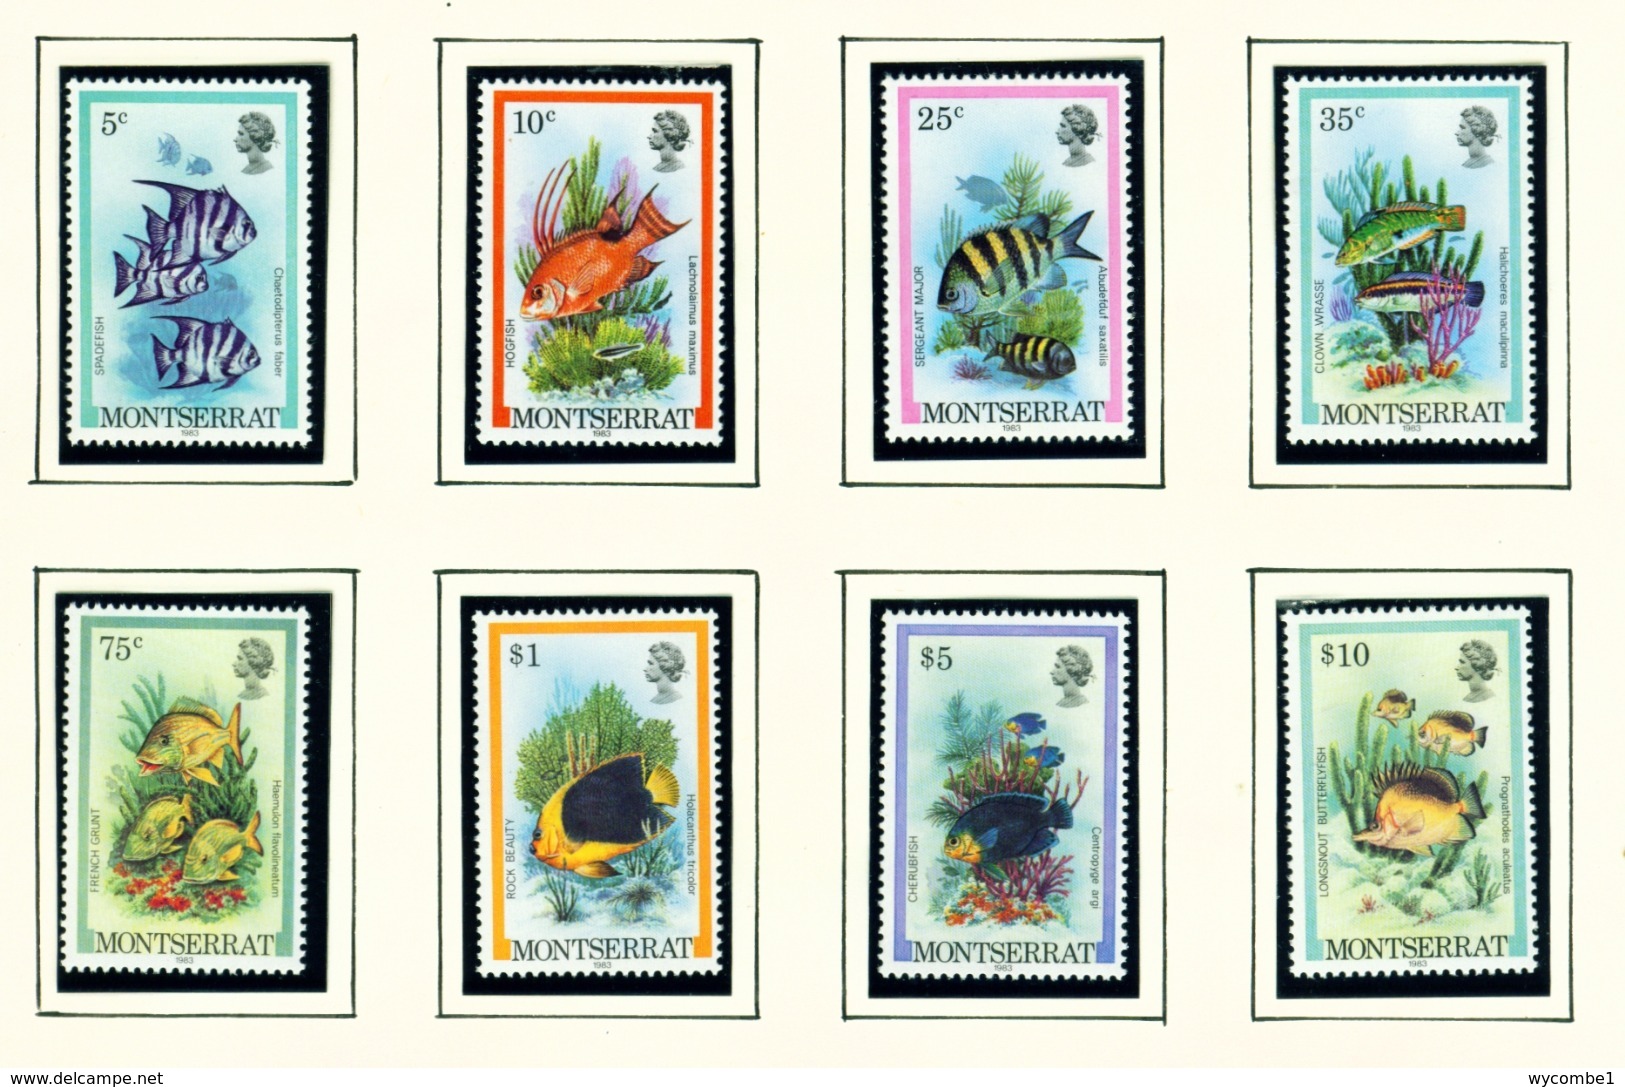 MONTSERRAT - 1983 Fish Definitives With Date Imprint Set Unmounted/Never Hinged Mint - Montserrat